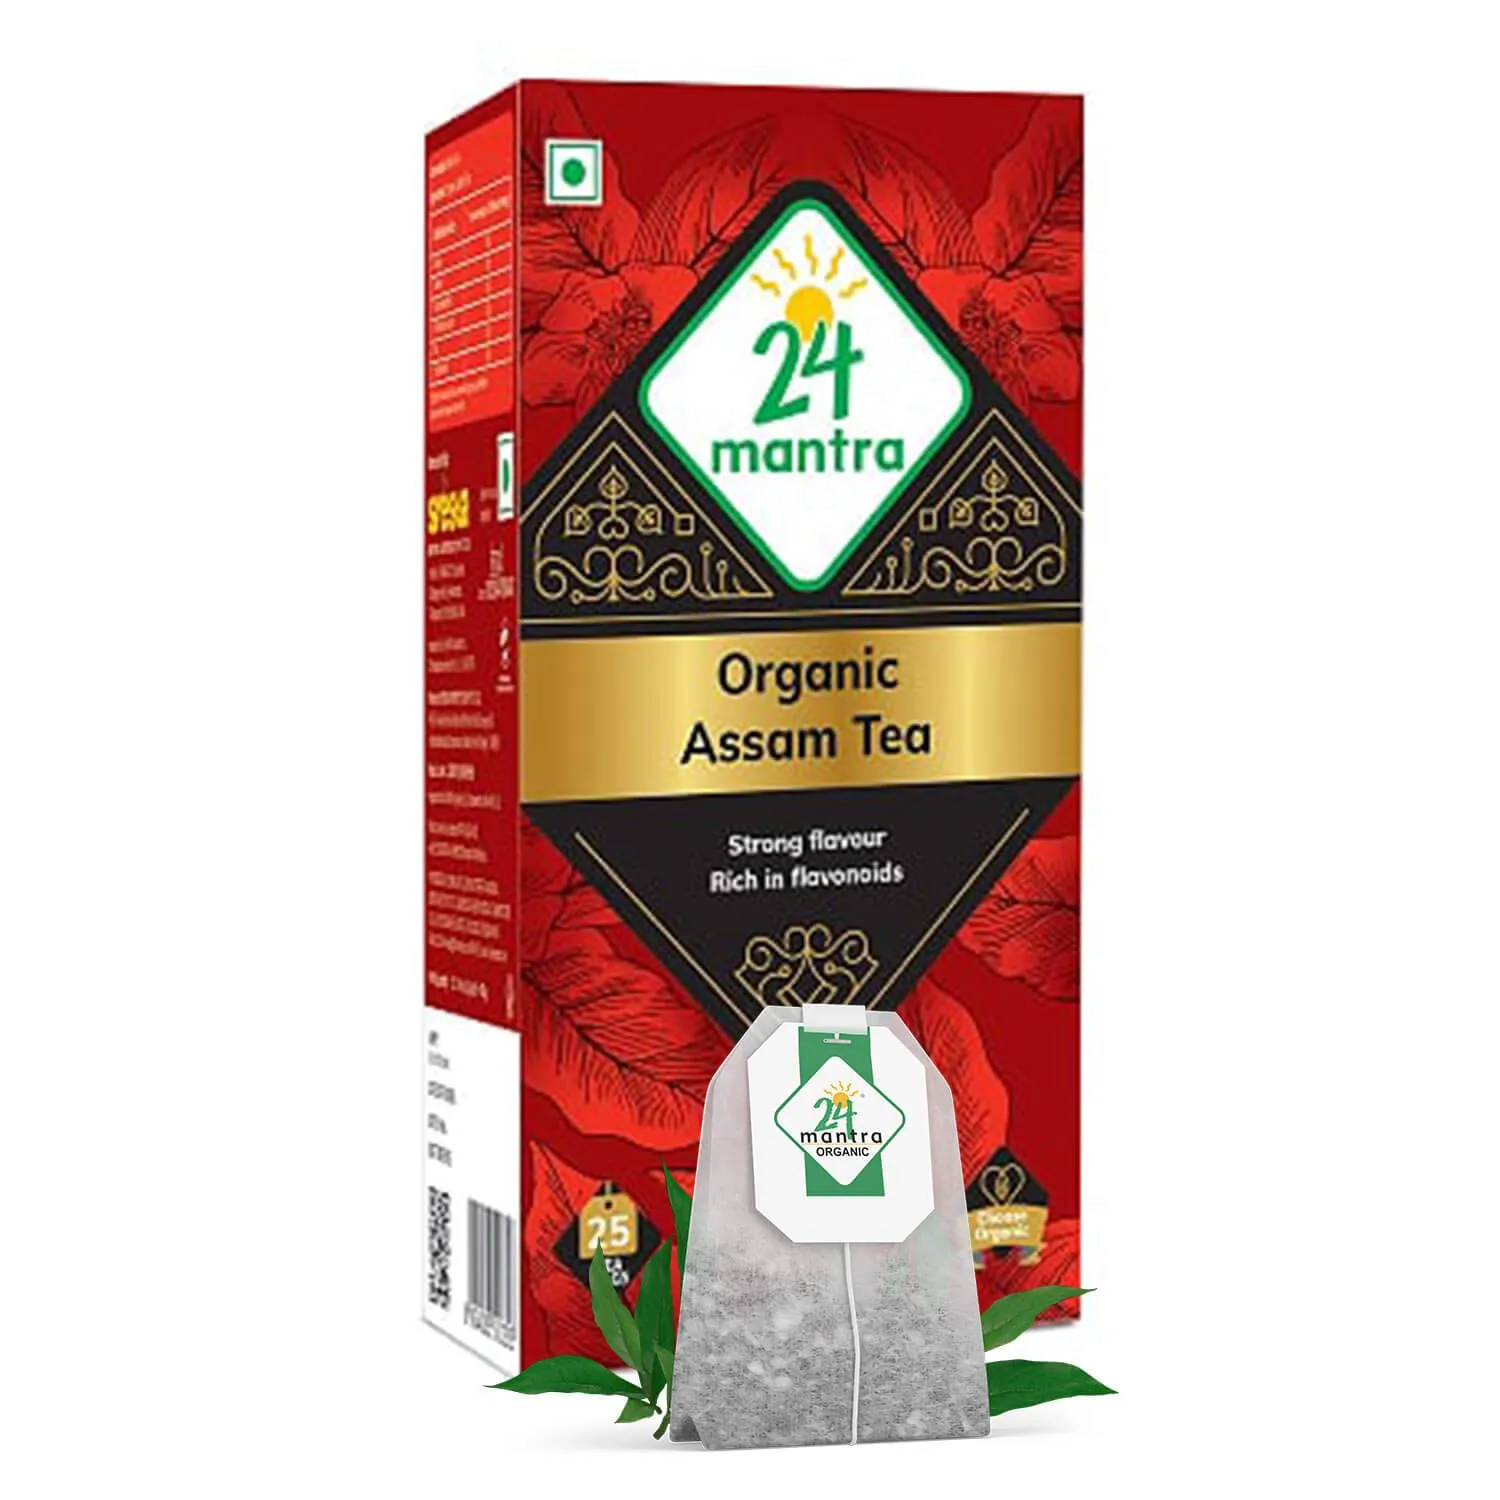 24 Mantra Assam Tea Bag 25 N